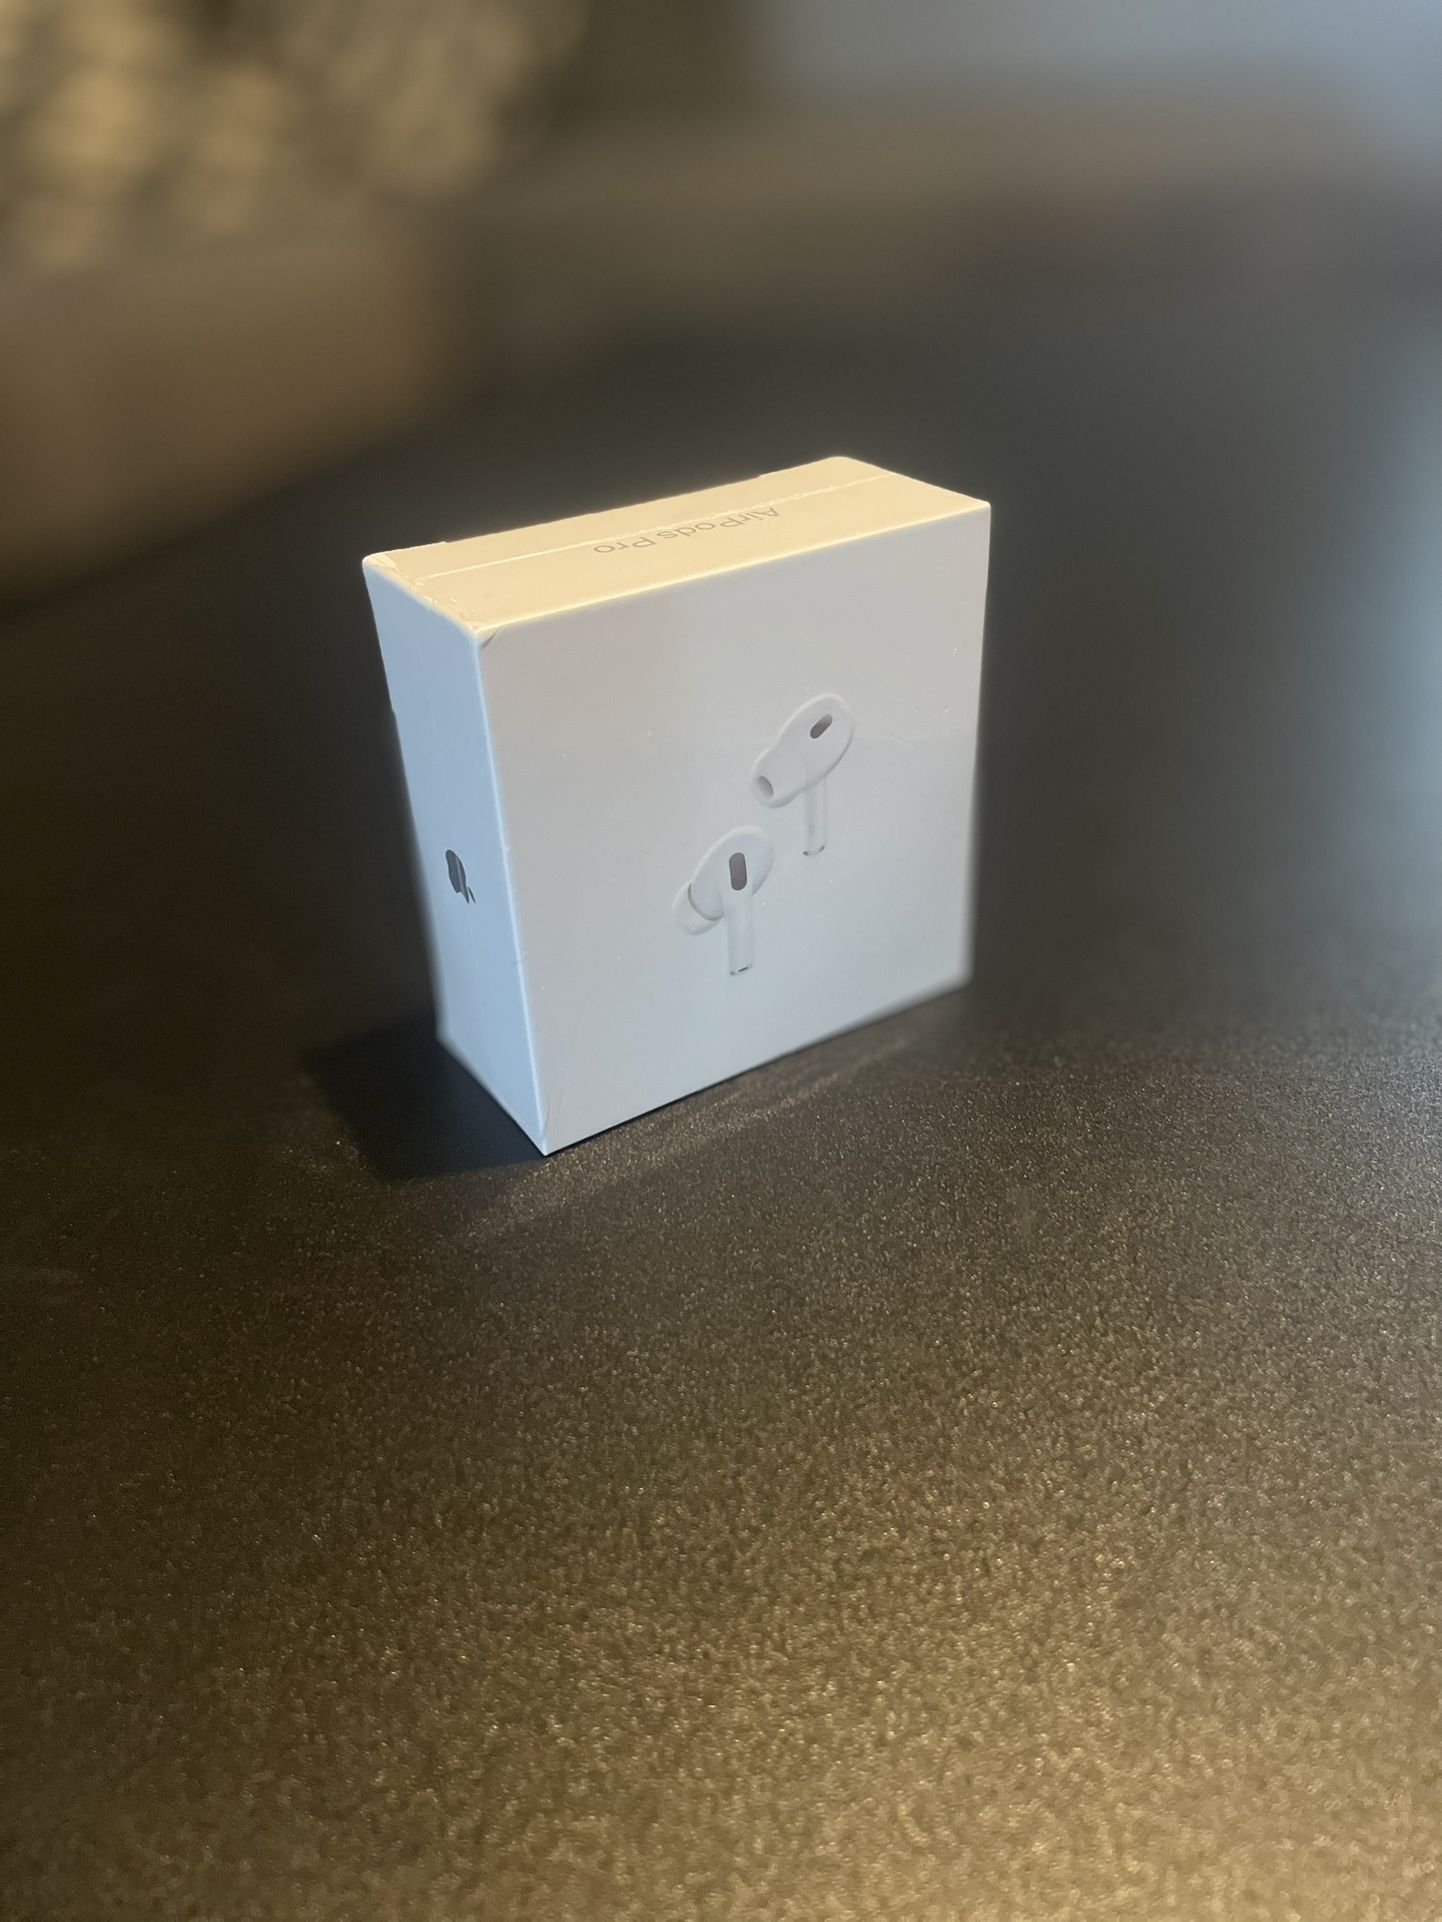 Brand New Wireless Earbuds-SEALD IN BOX